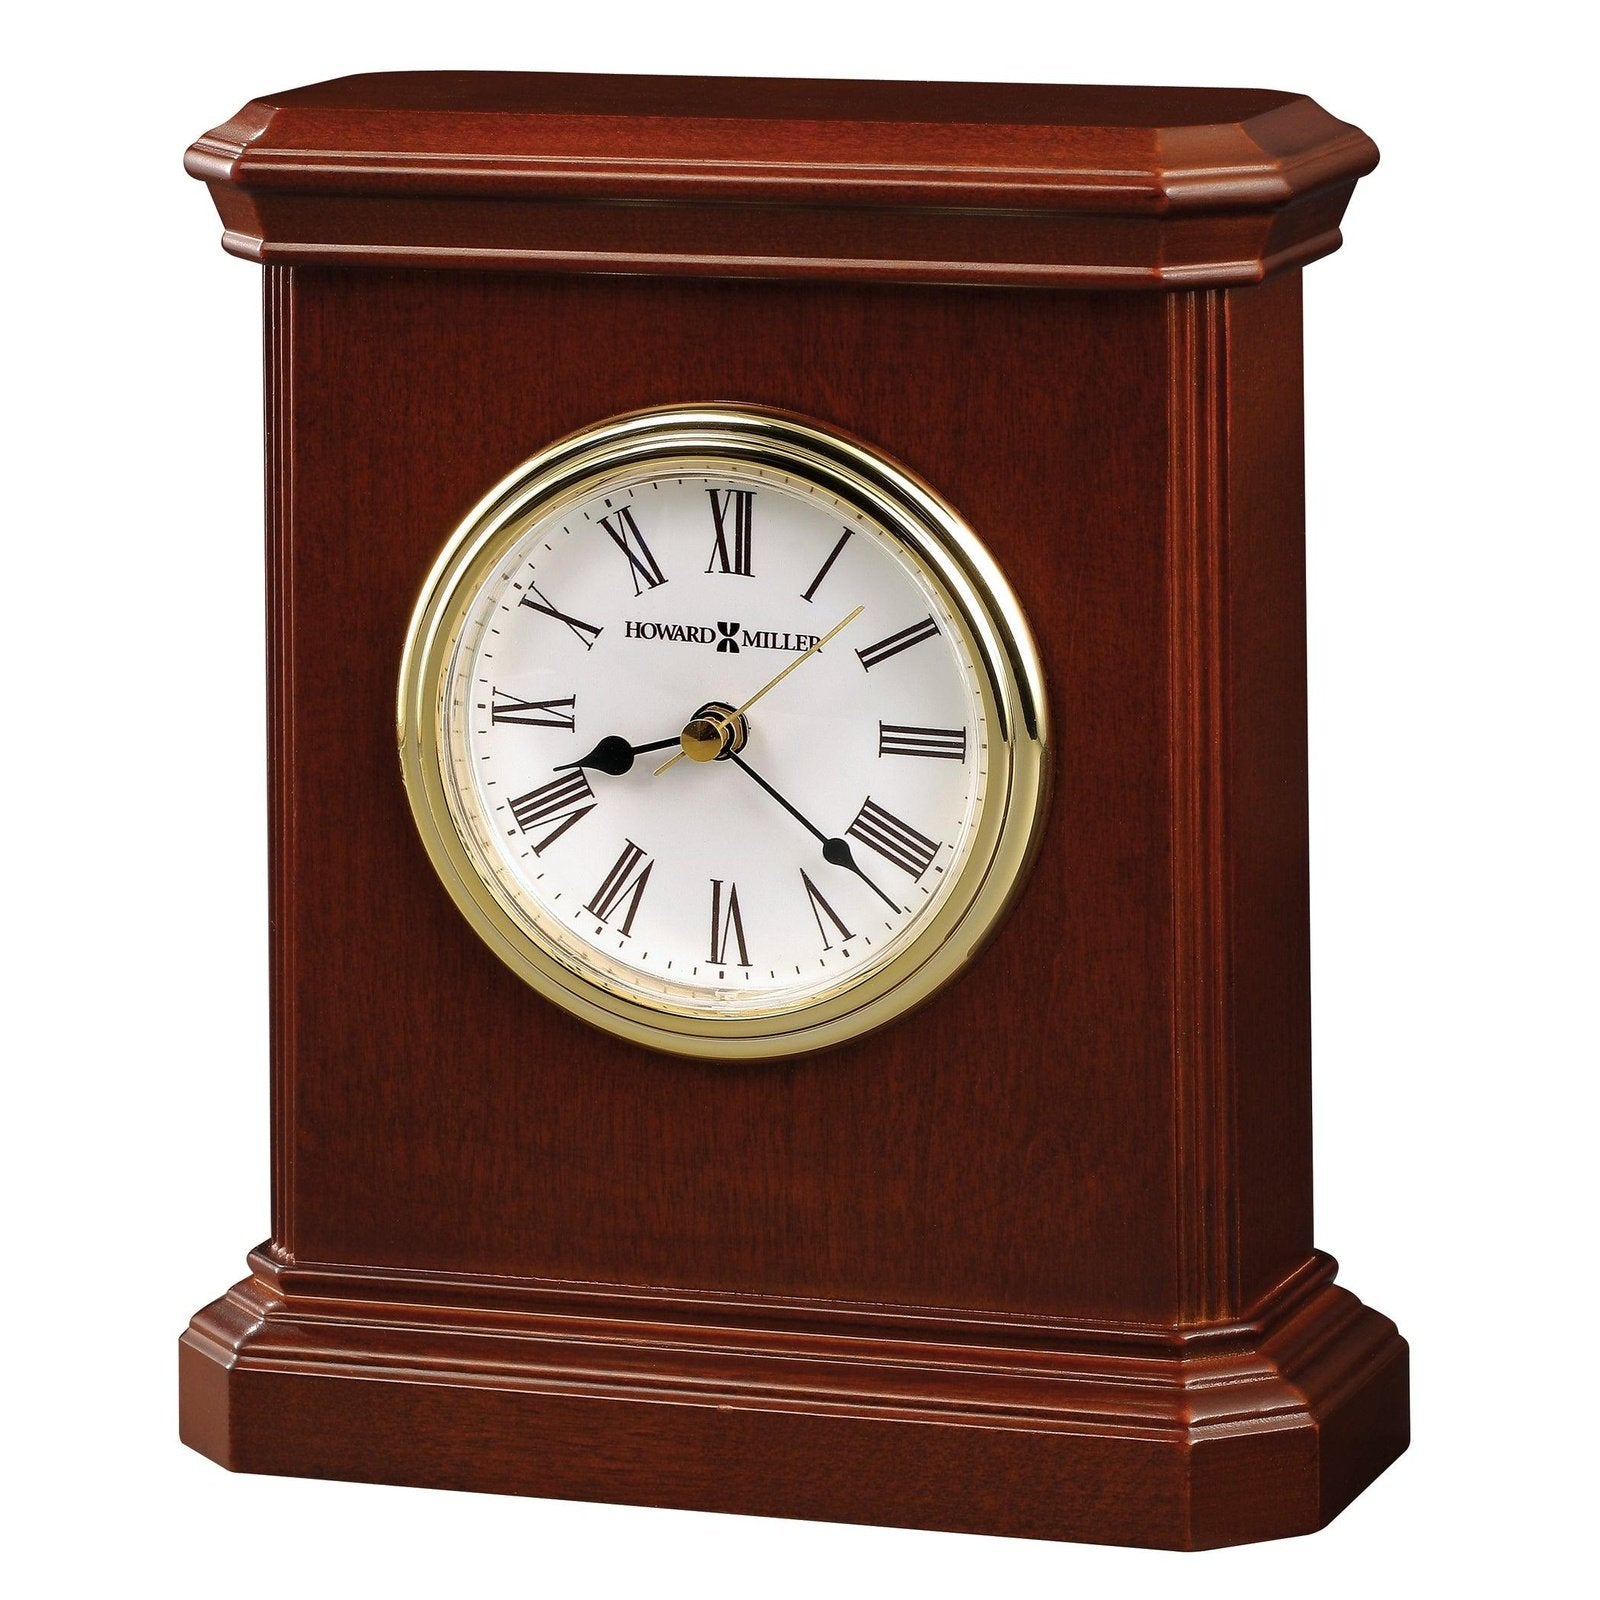 Howard Miller Desk and Table Clocks – Grandfather Clocks